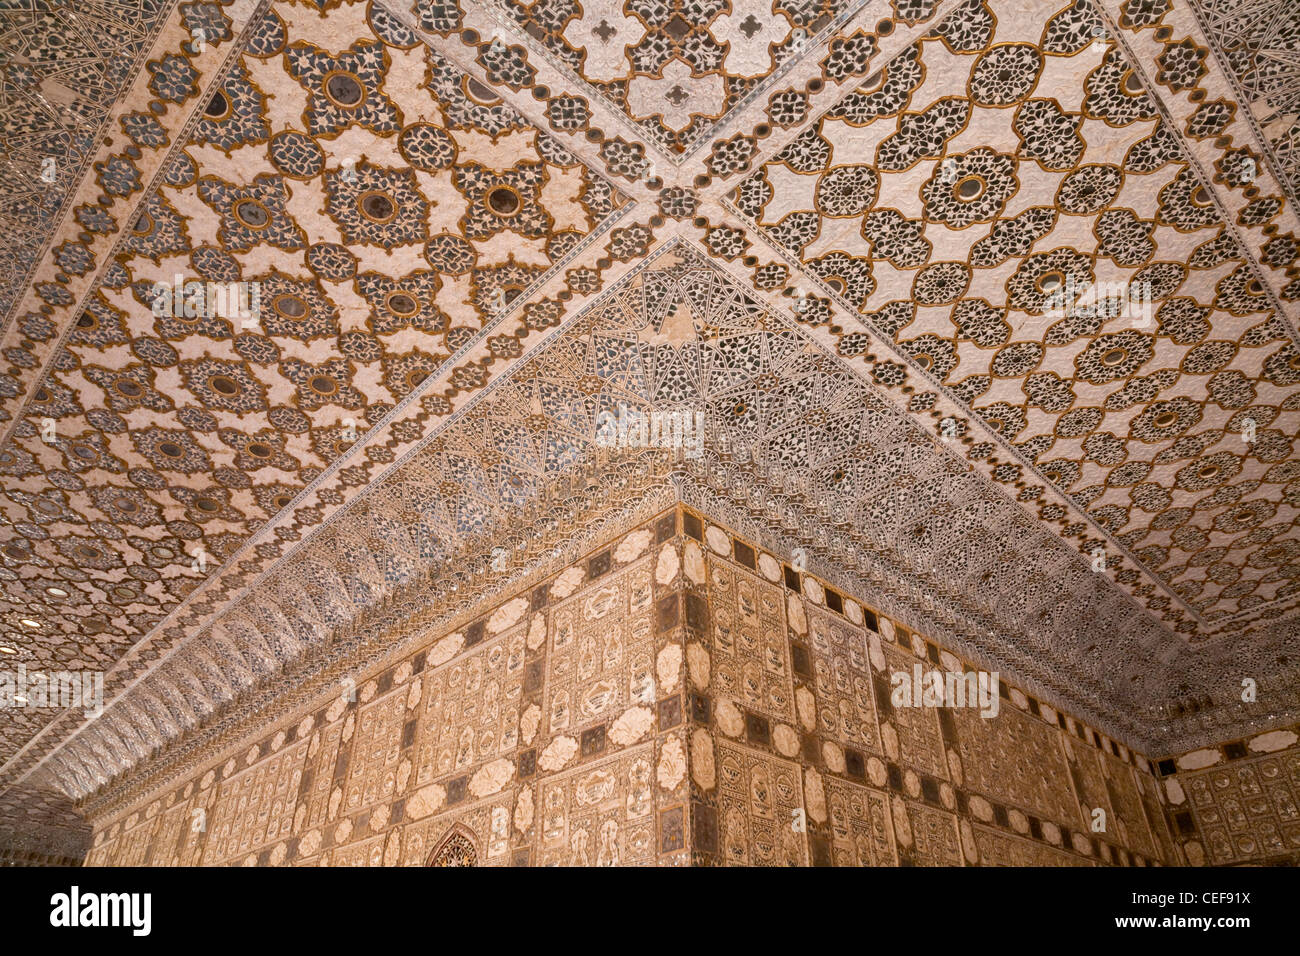 Ornate arcade decorated with tileworks inside Amber Palace, Jaipur, Rajasthan, India Stock Photo